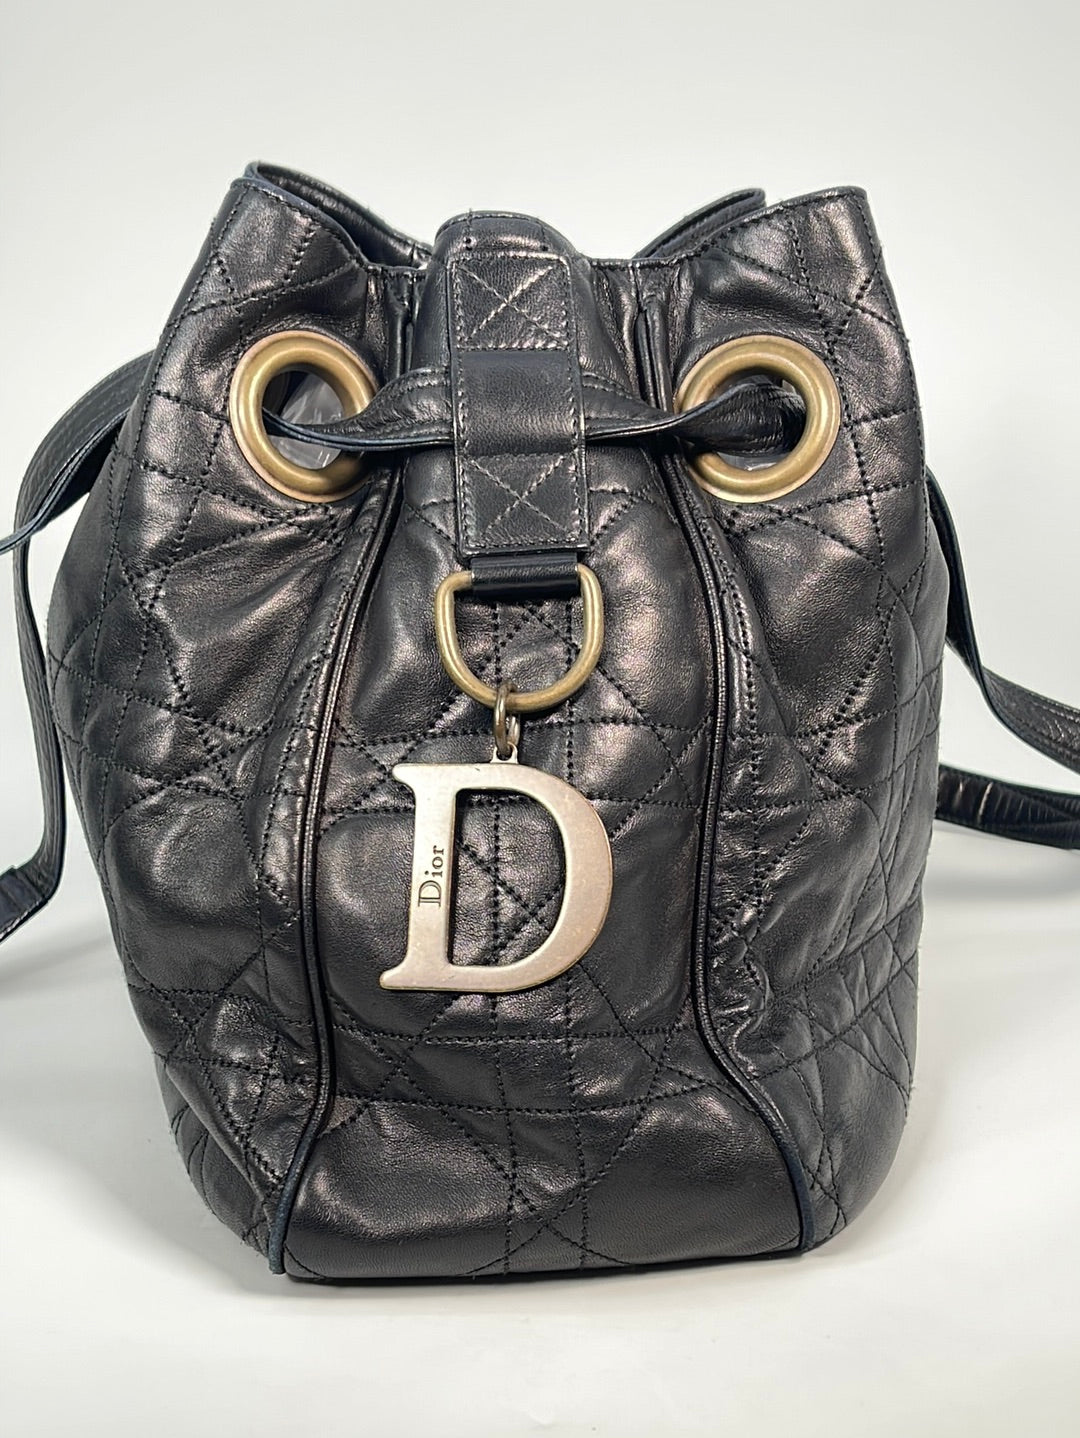 PRELOVED Christian Dior Black Lambskin Cannage Quilted Shoulder Bag 07MA0096 011023 DEAL ***- $900 OFF